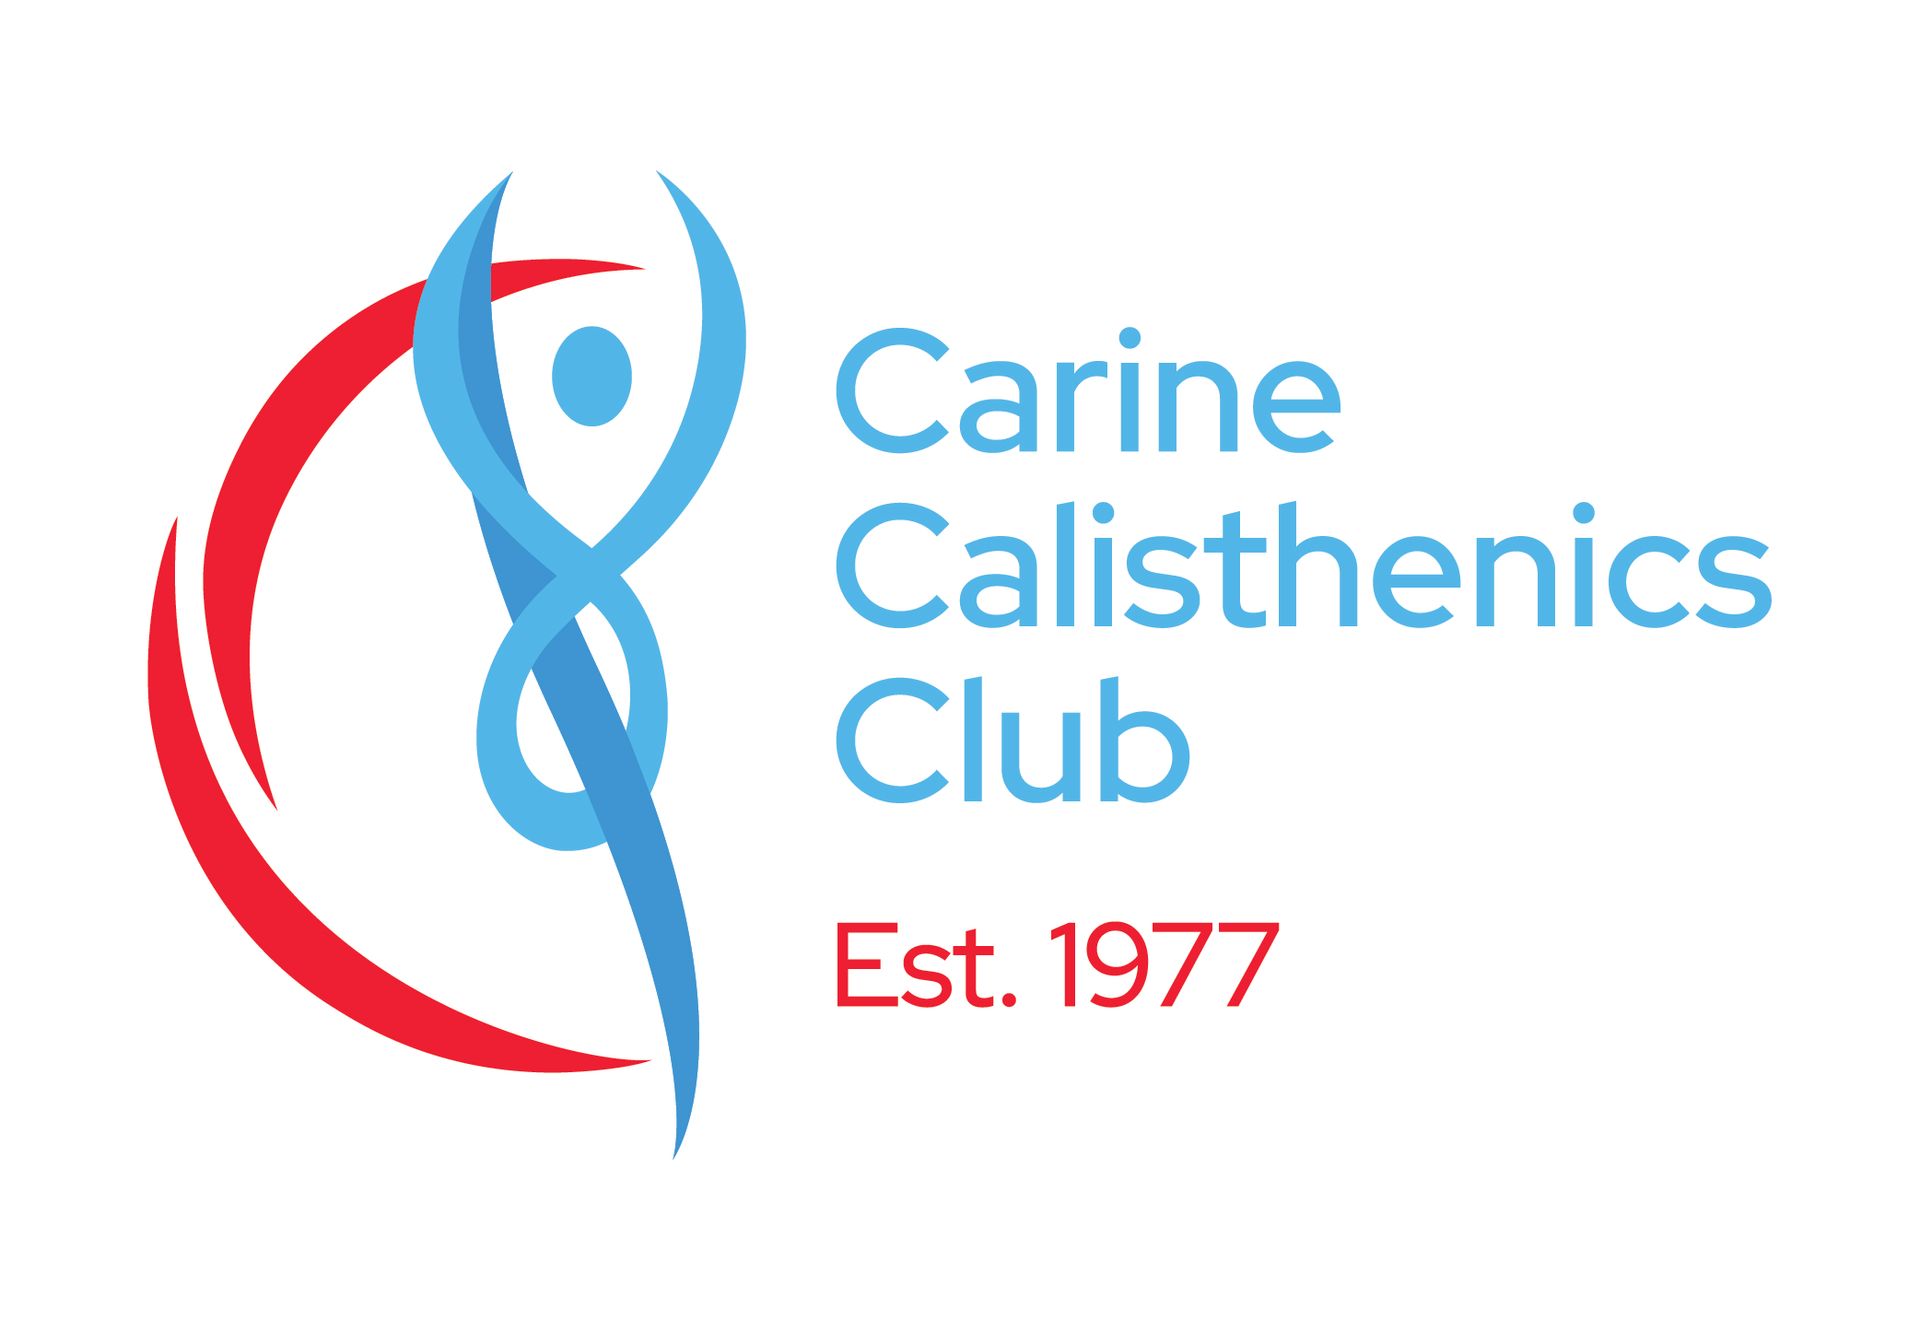 Carine Calisthenics Club